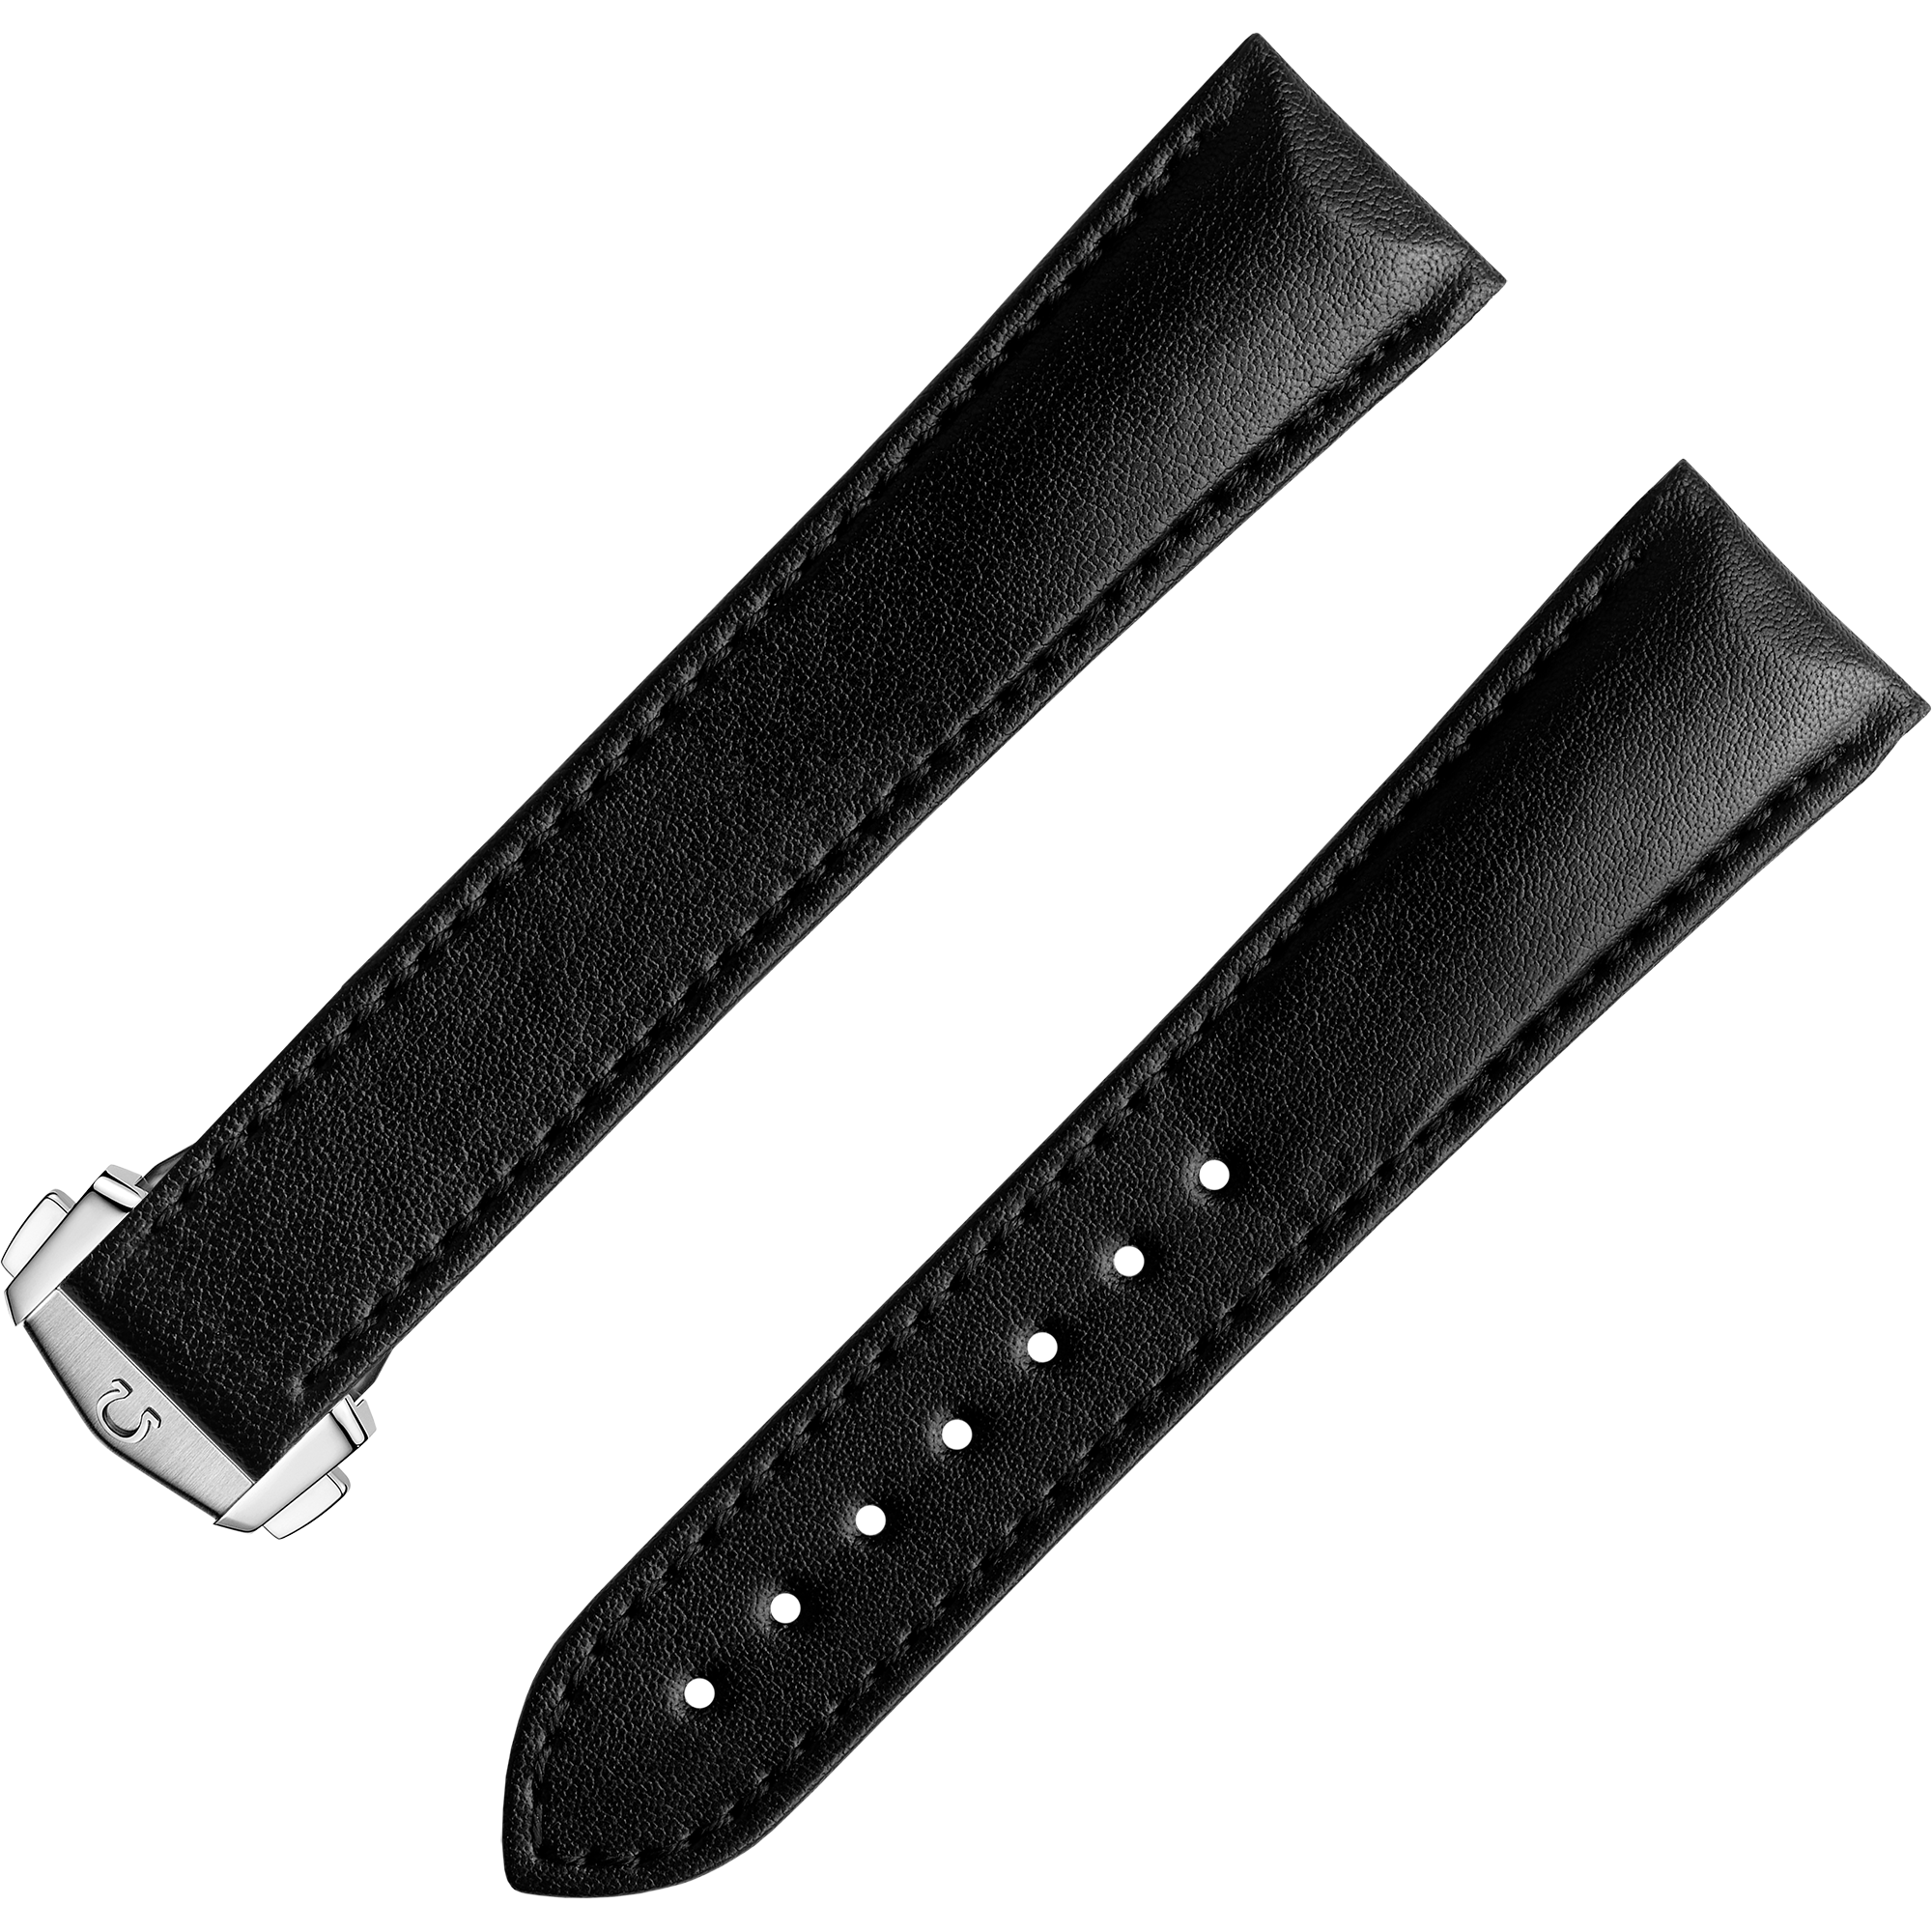 Two-piece strap - Black vegan strap with foldover clasp - 032Z017135